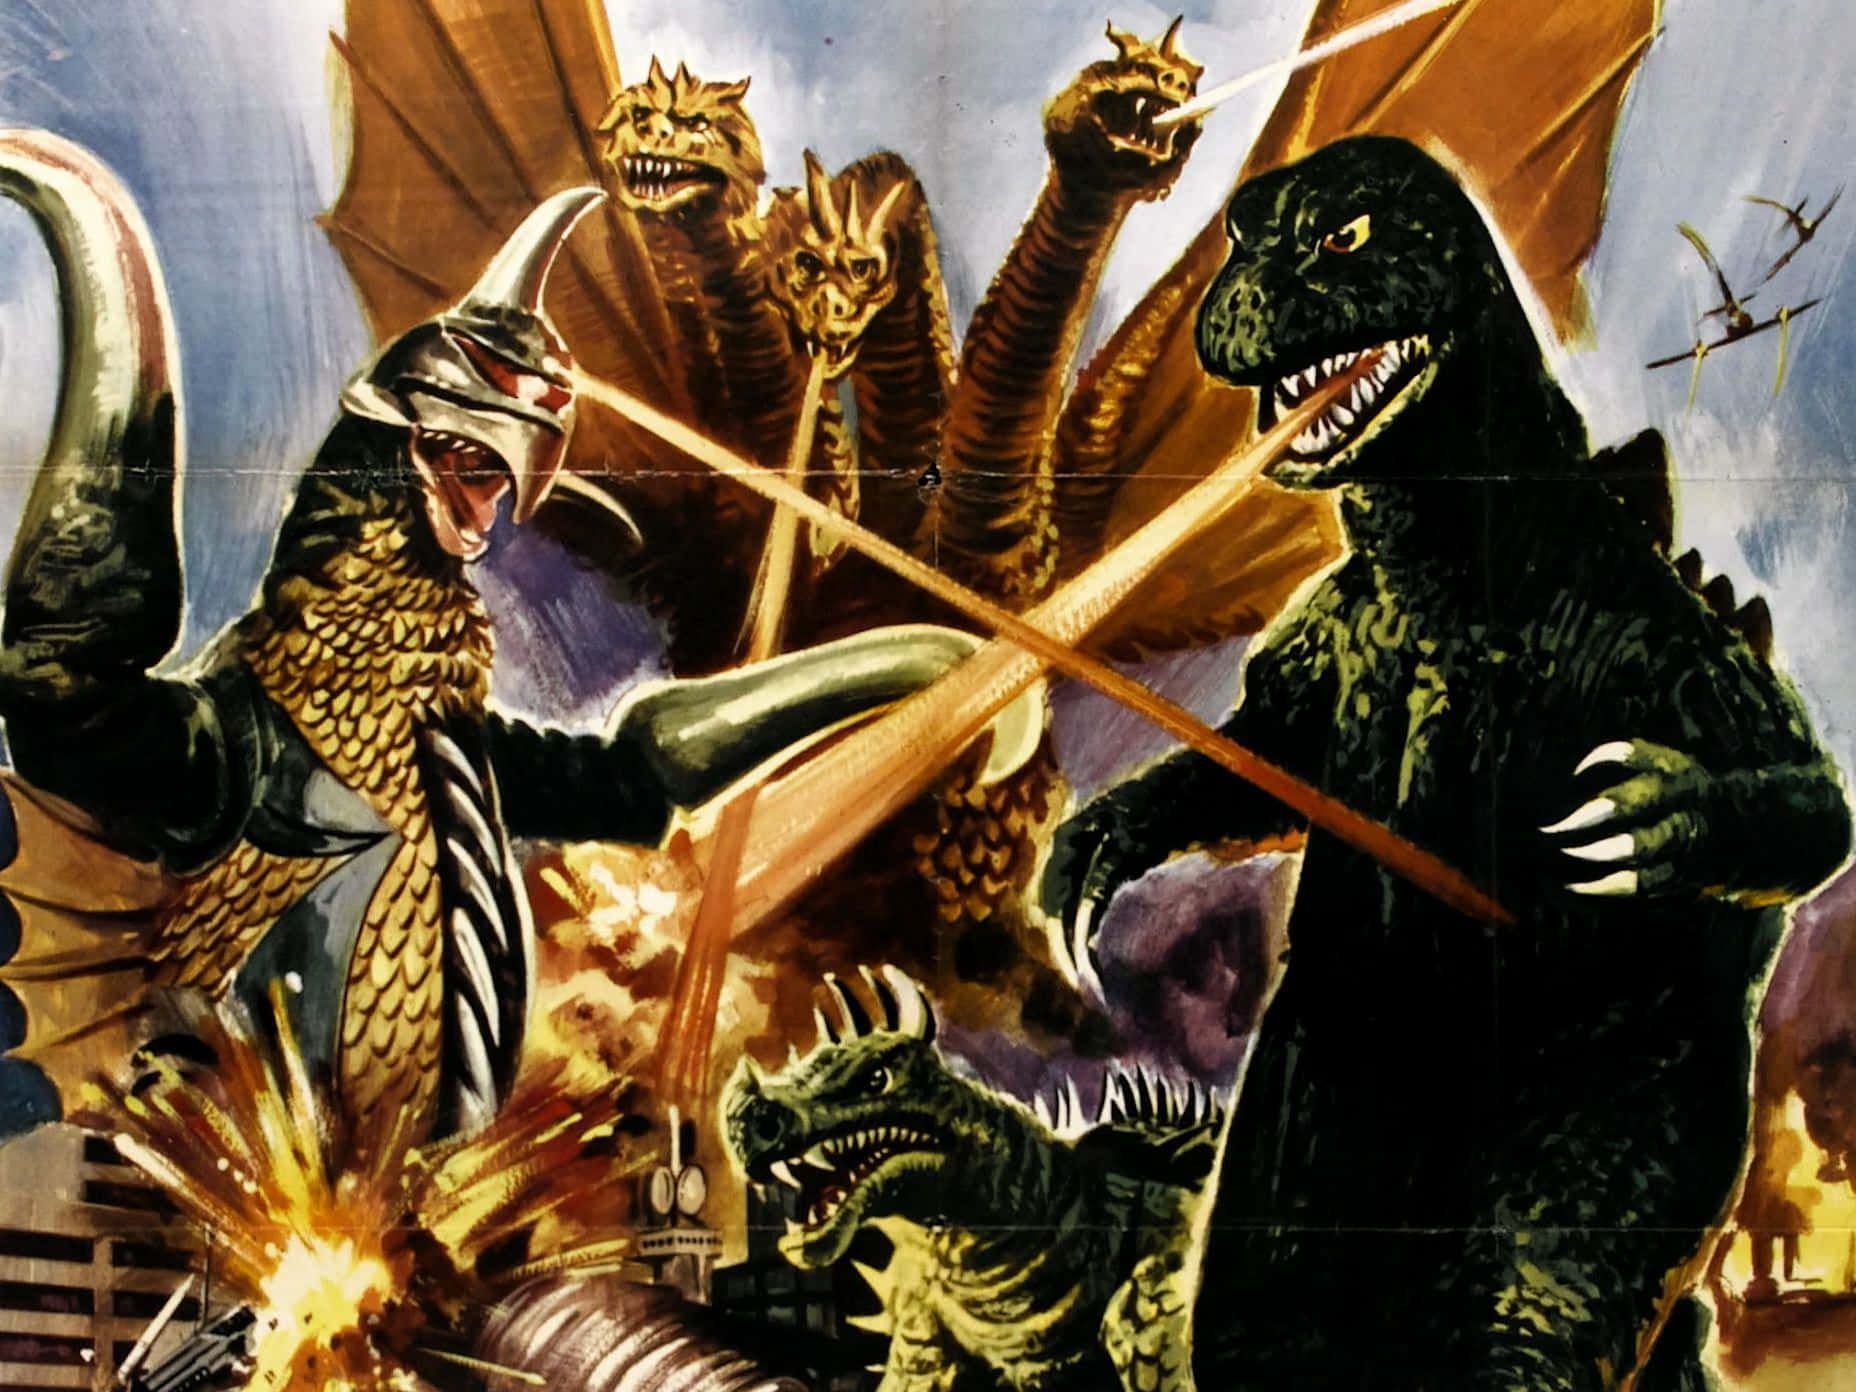 The iconic Classic Godzilla unleashes terror in the city. Wallpaper